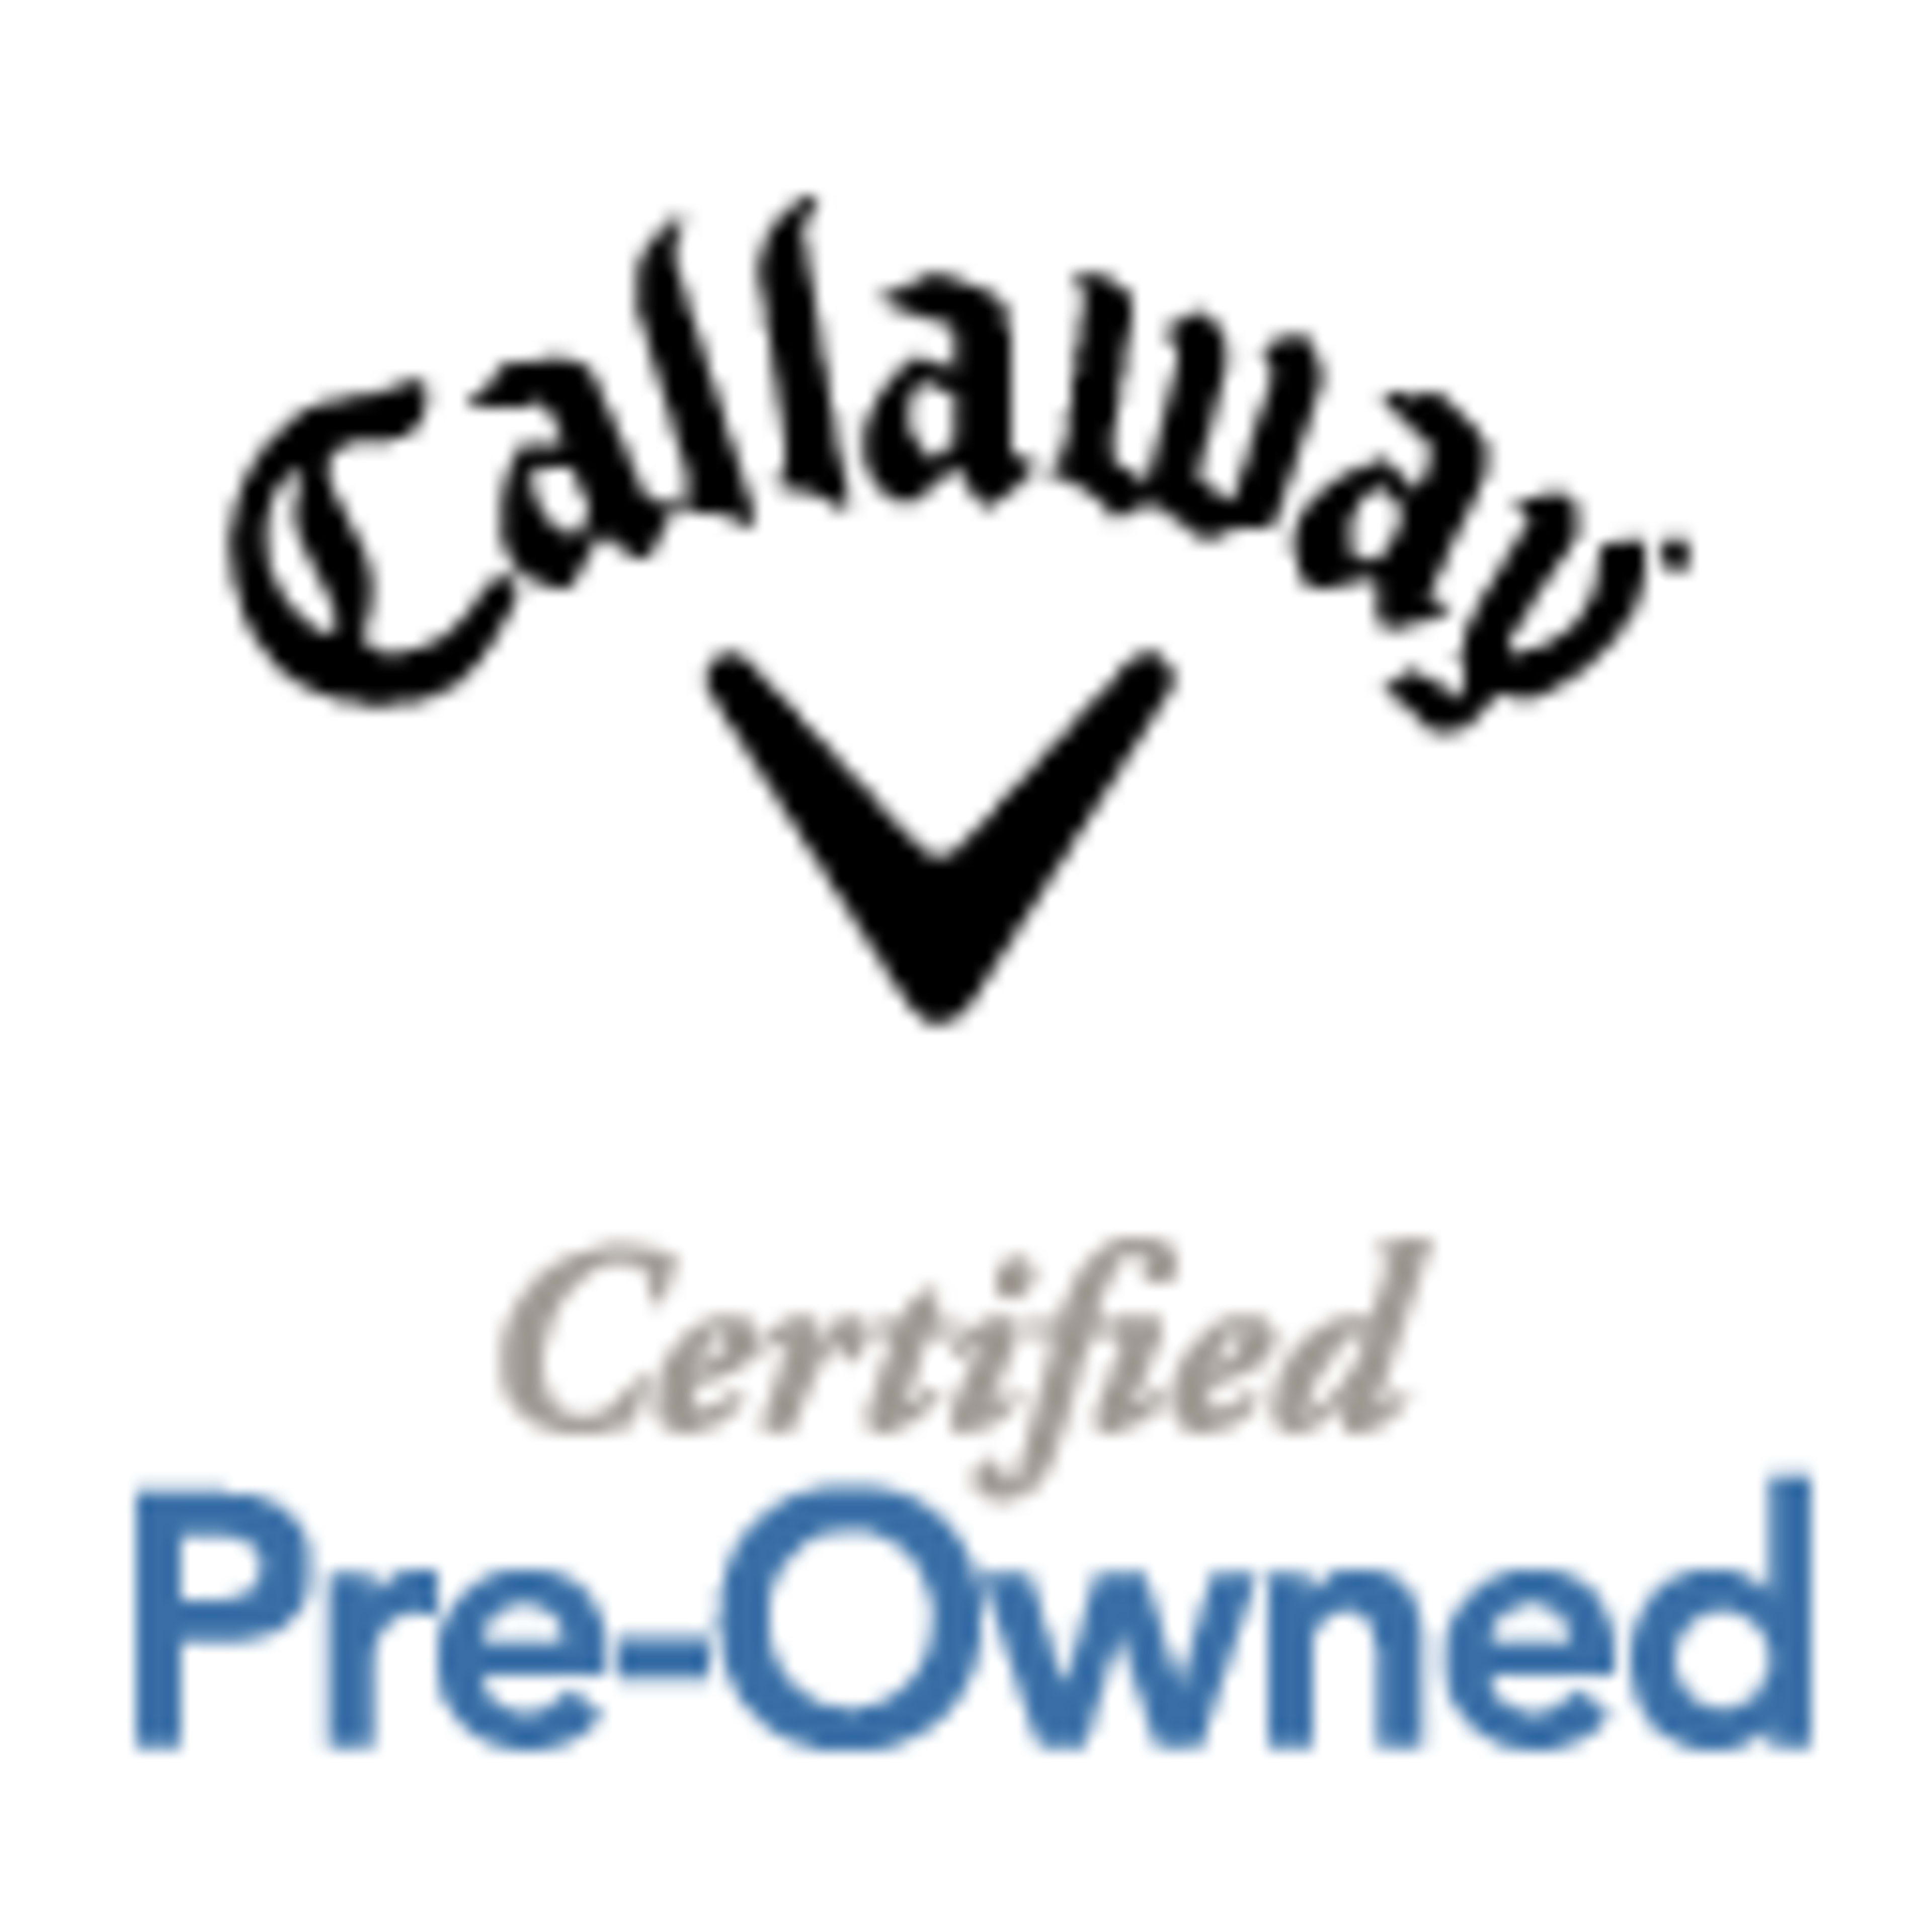 Callaway Golf Pre-OwnedCode